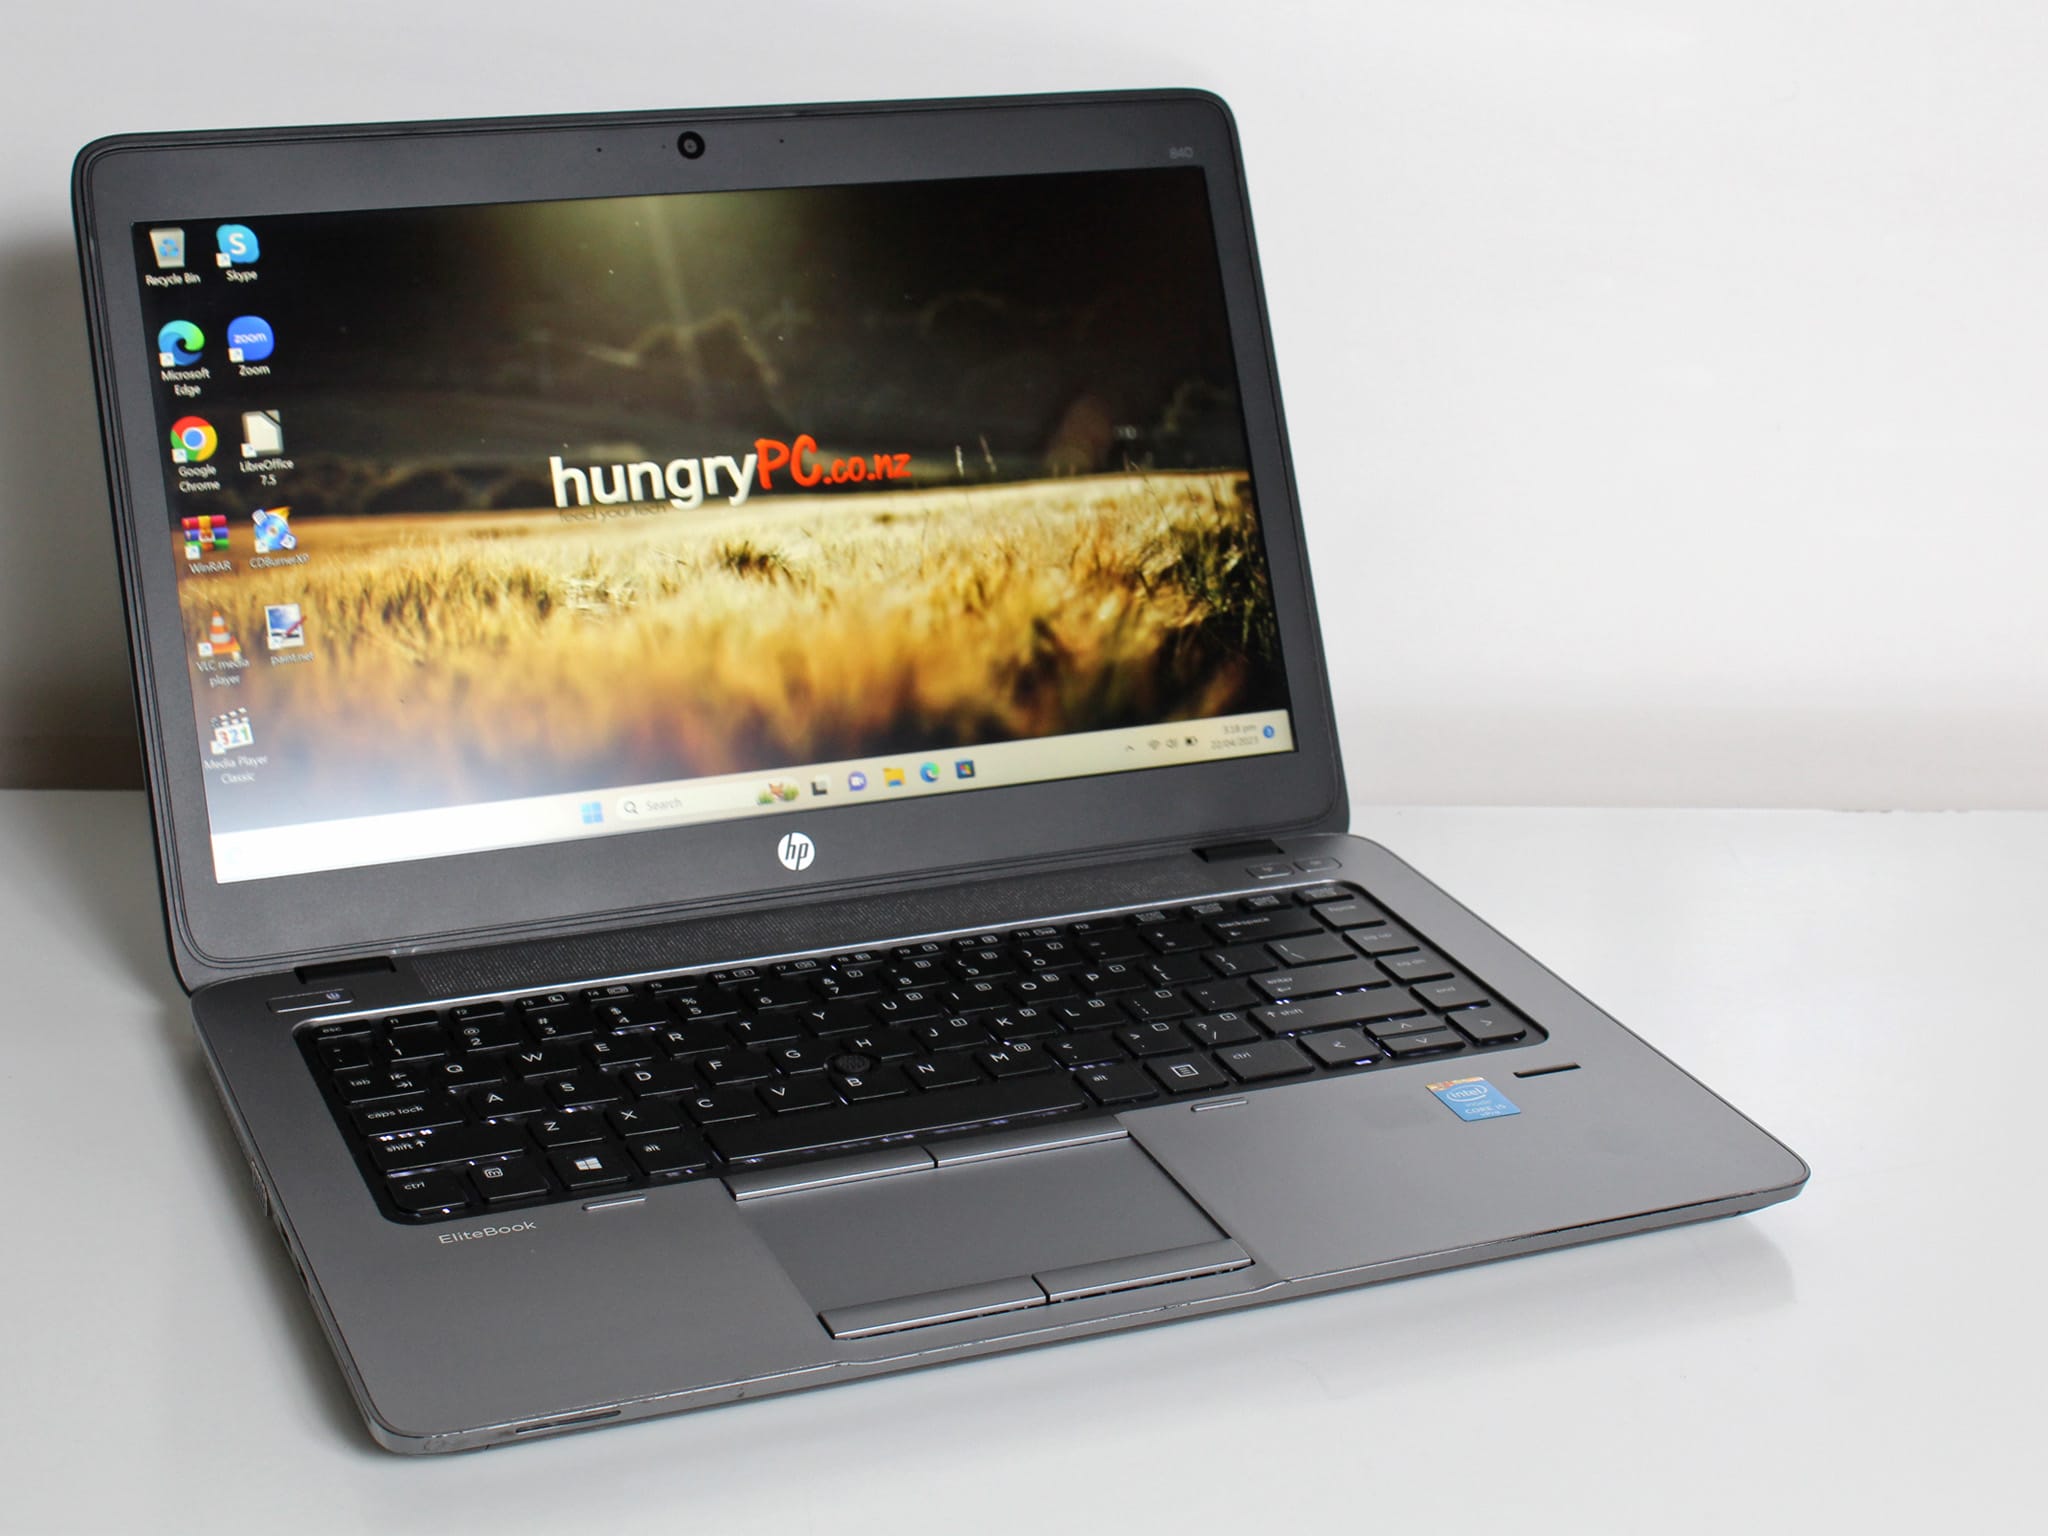 hp elitebook 840 laptop for sale in new zealand